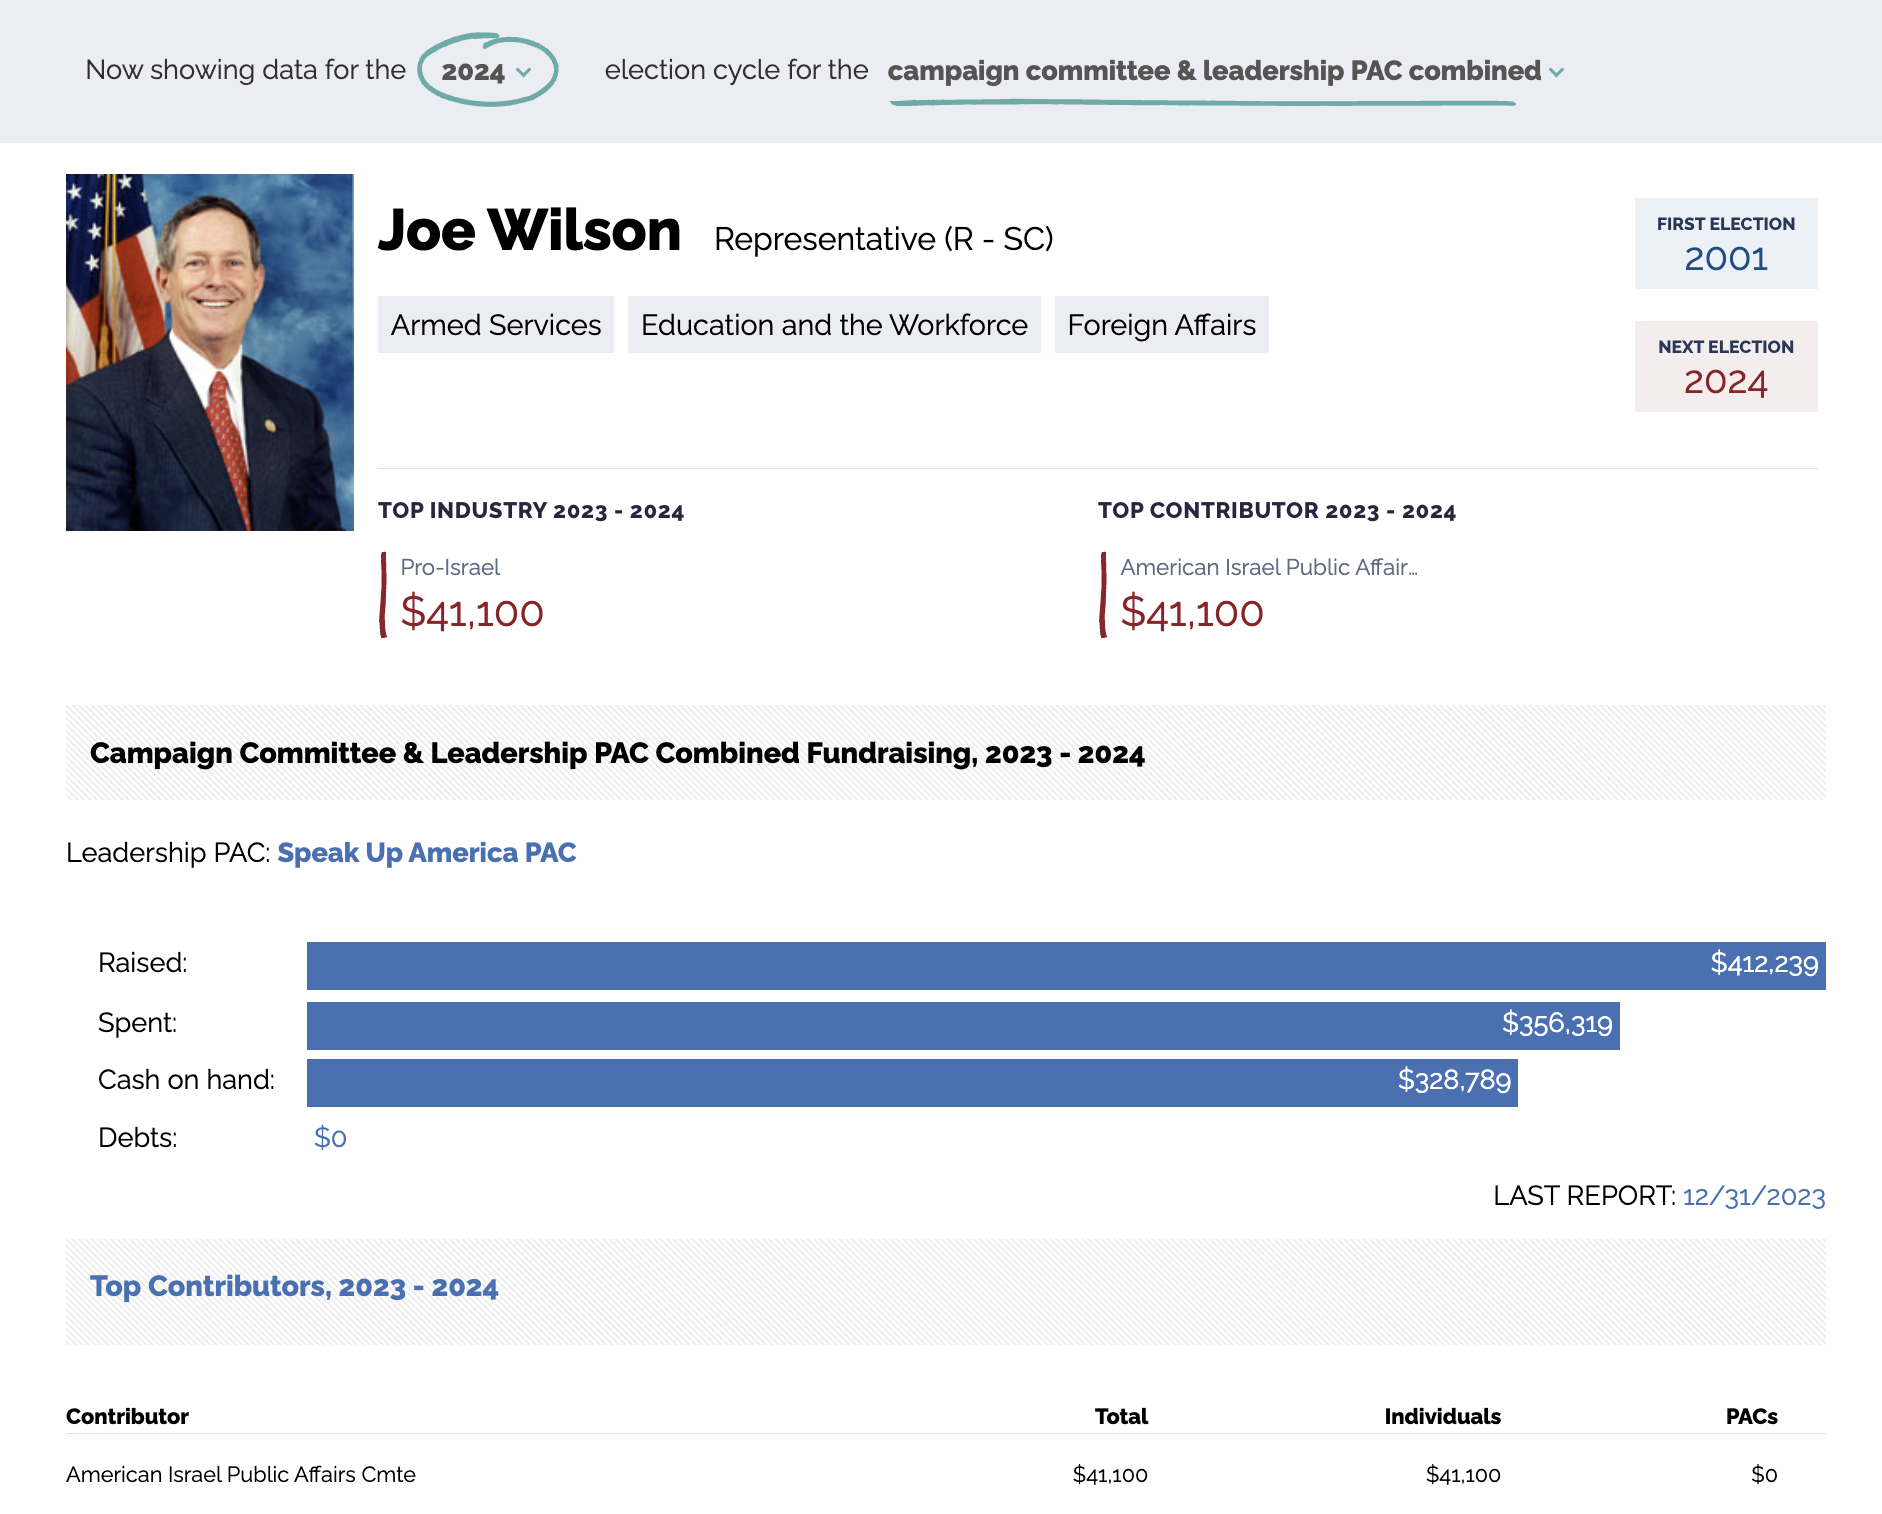 Joe Wilson's campaign fundraising sources 